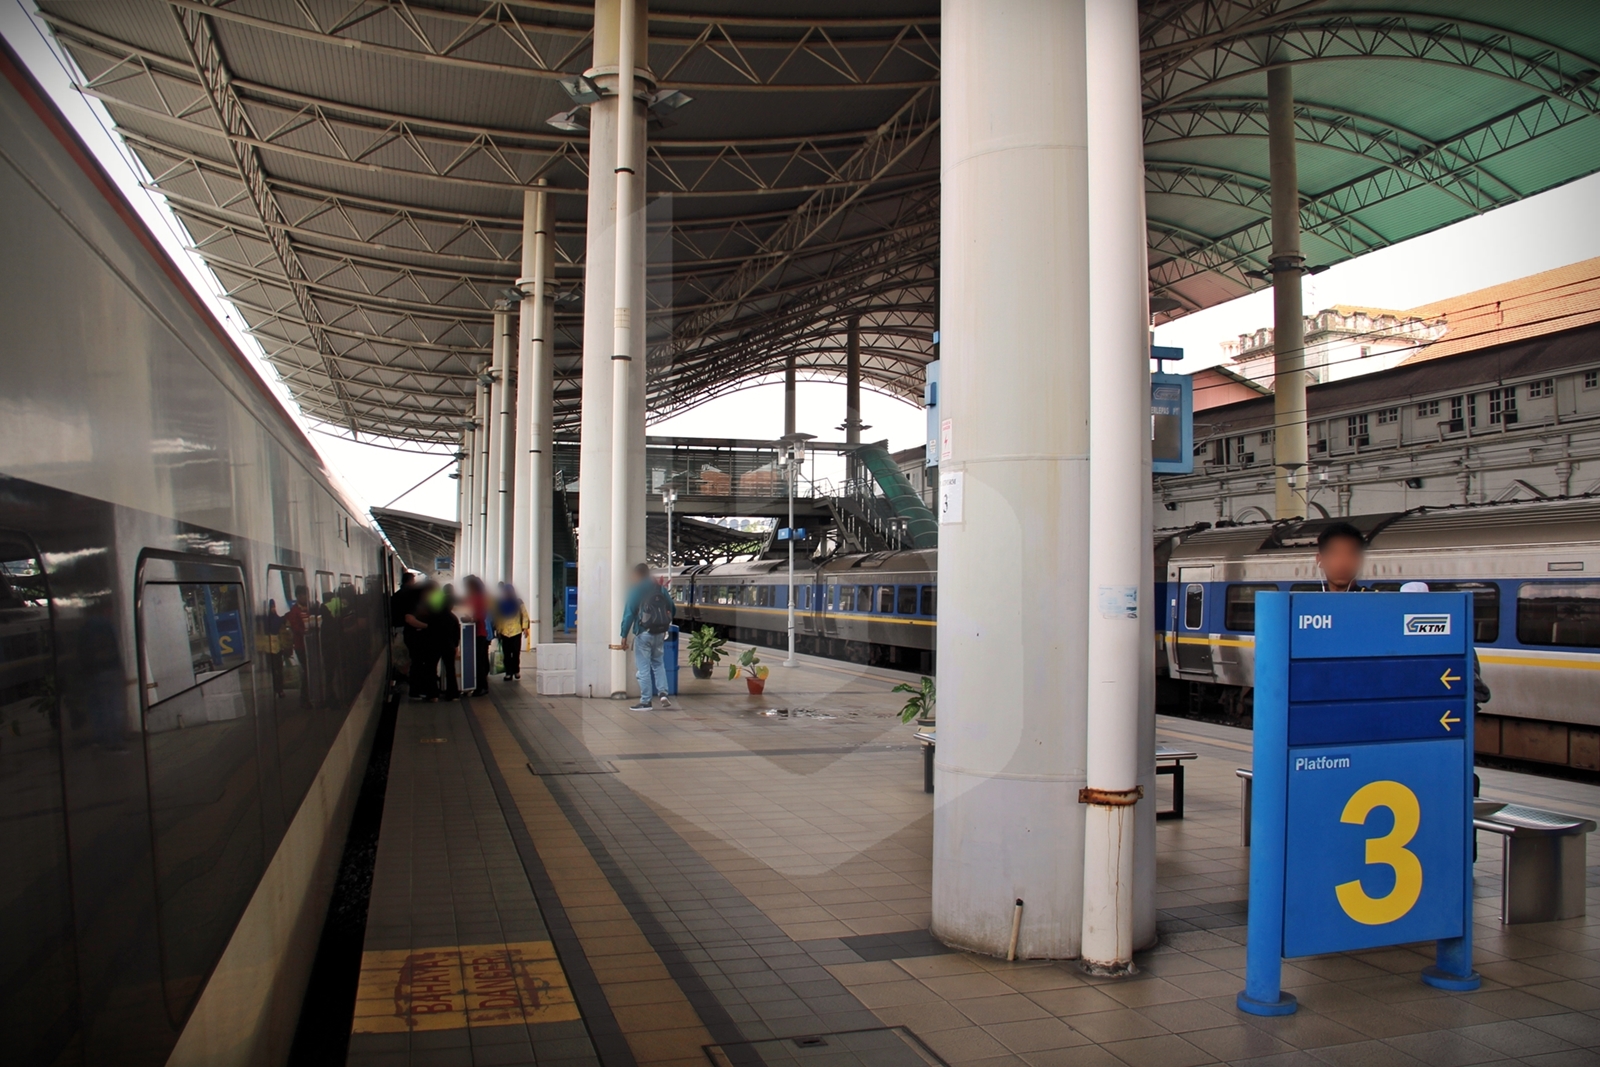 Padang Besar to Kuala Lumpur by train